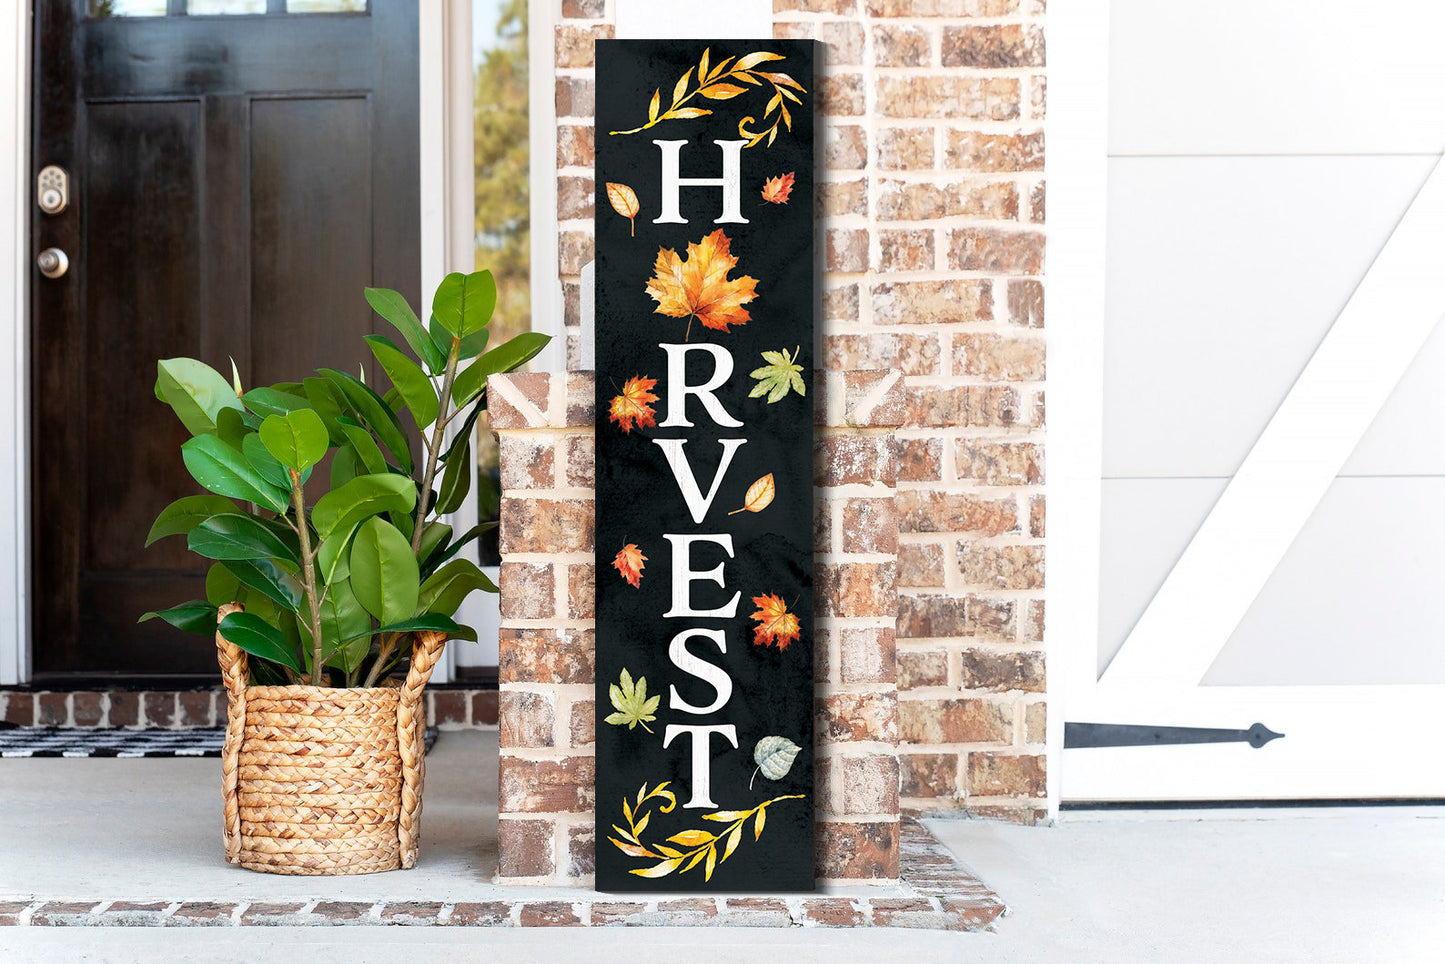 36in "Harvest" Fall Porch Sign | Front Door Decor | Autumn Celebrations Sign | Vintage Farmhouse Decor | Seasonal Outdoor Decoration